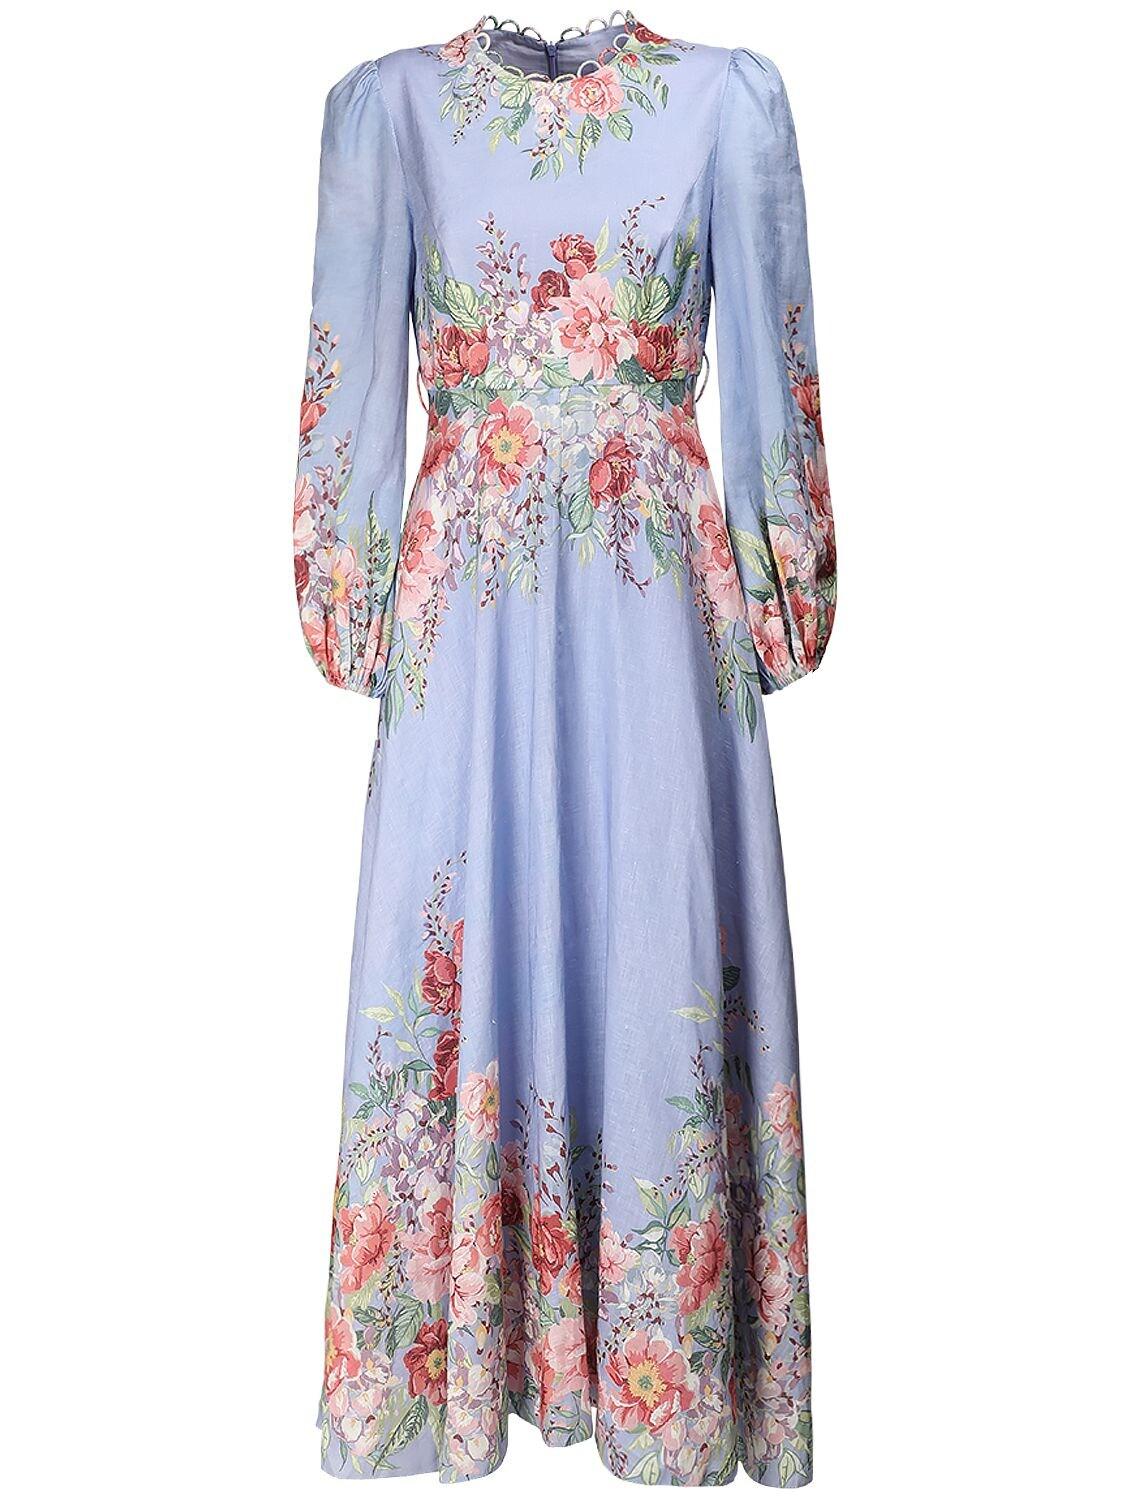 Zimmermann Bellitude Floral Print Linen Midi Dress in Blue - Lyst